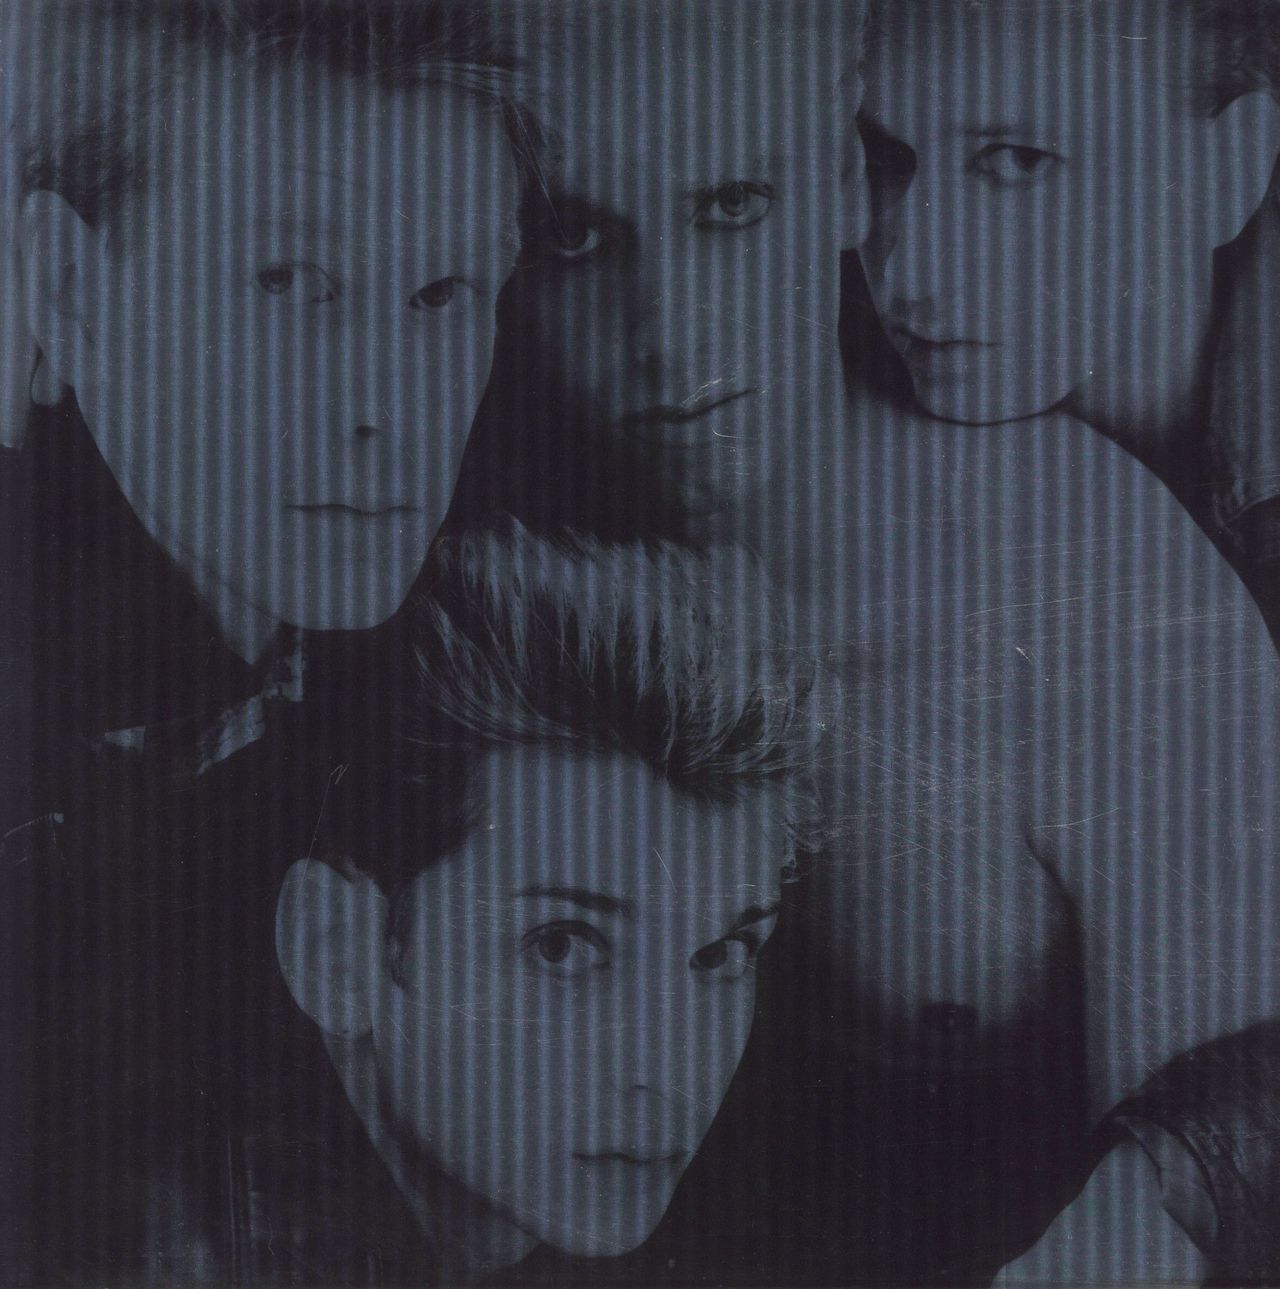 Depeche Mode ‎– The Singles 81 - 85 (Grey Vinyl) - Vinyl Pussycat Records